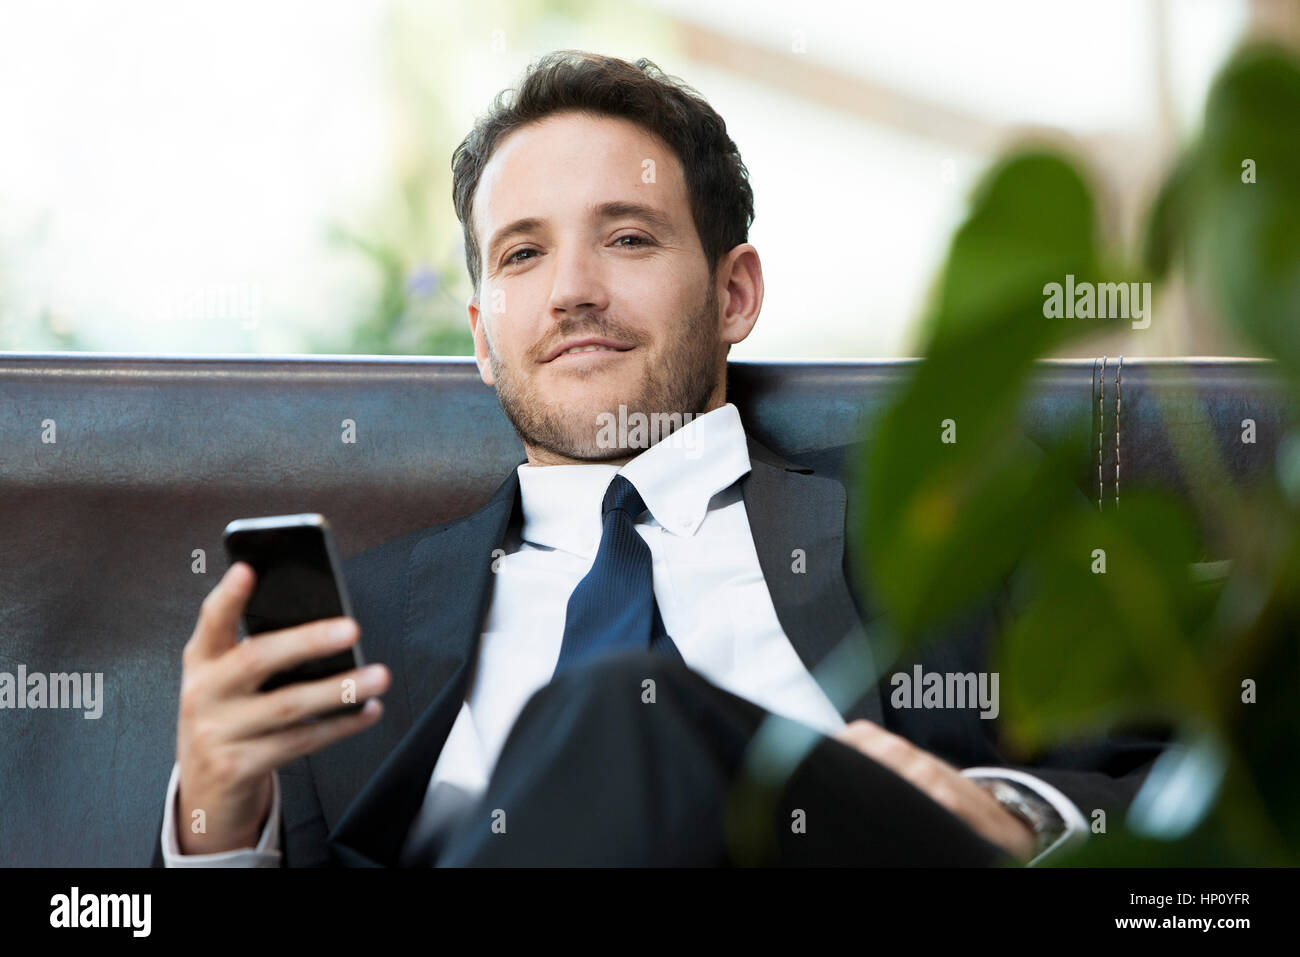 Business executive using smartphone Stock Photo